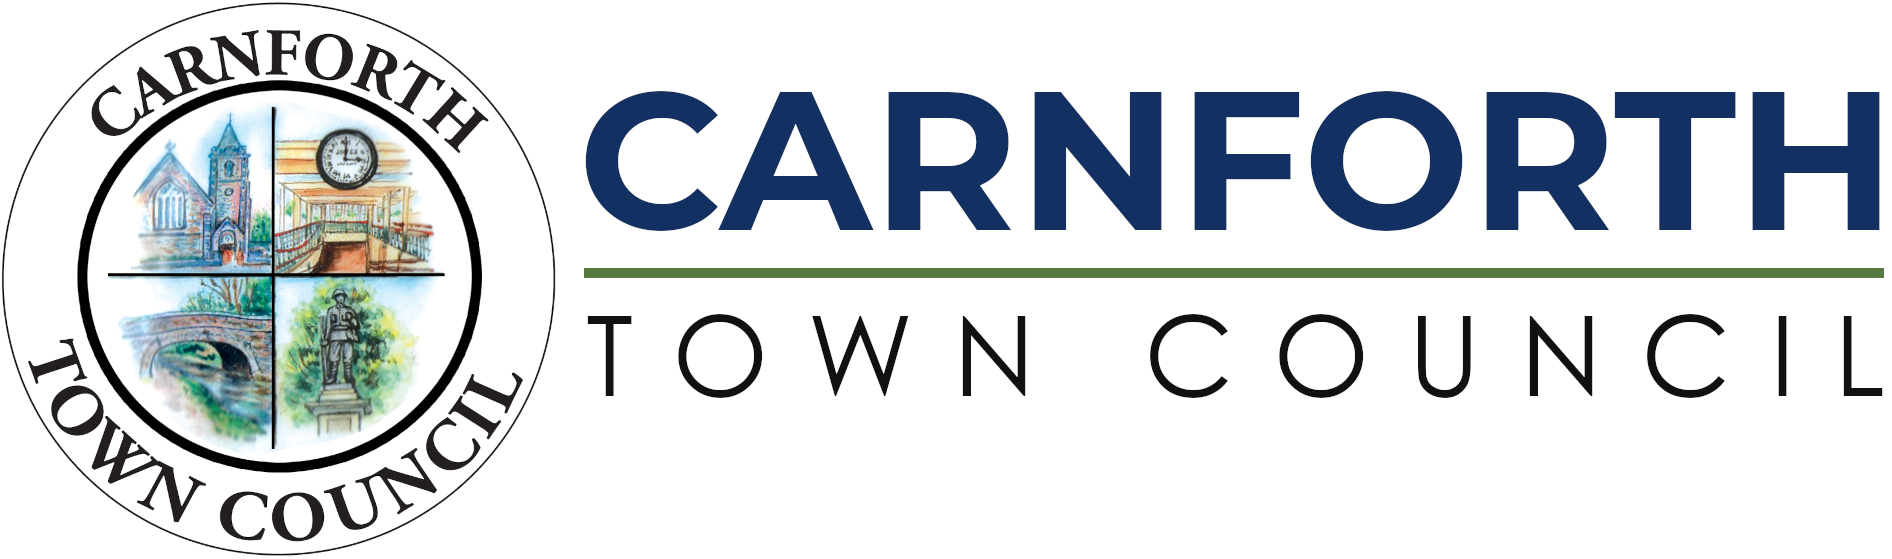 Carnforth Town Council